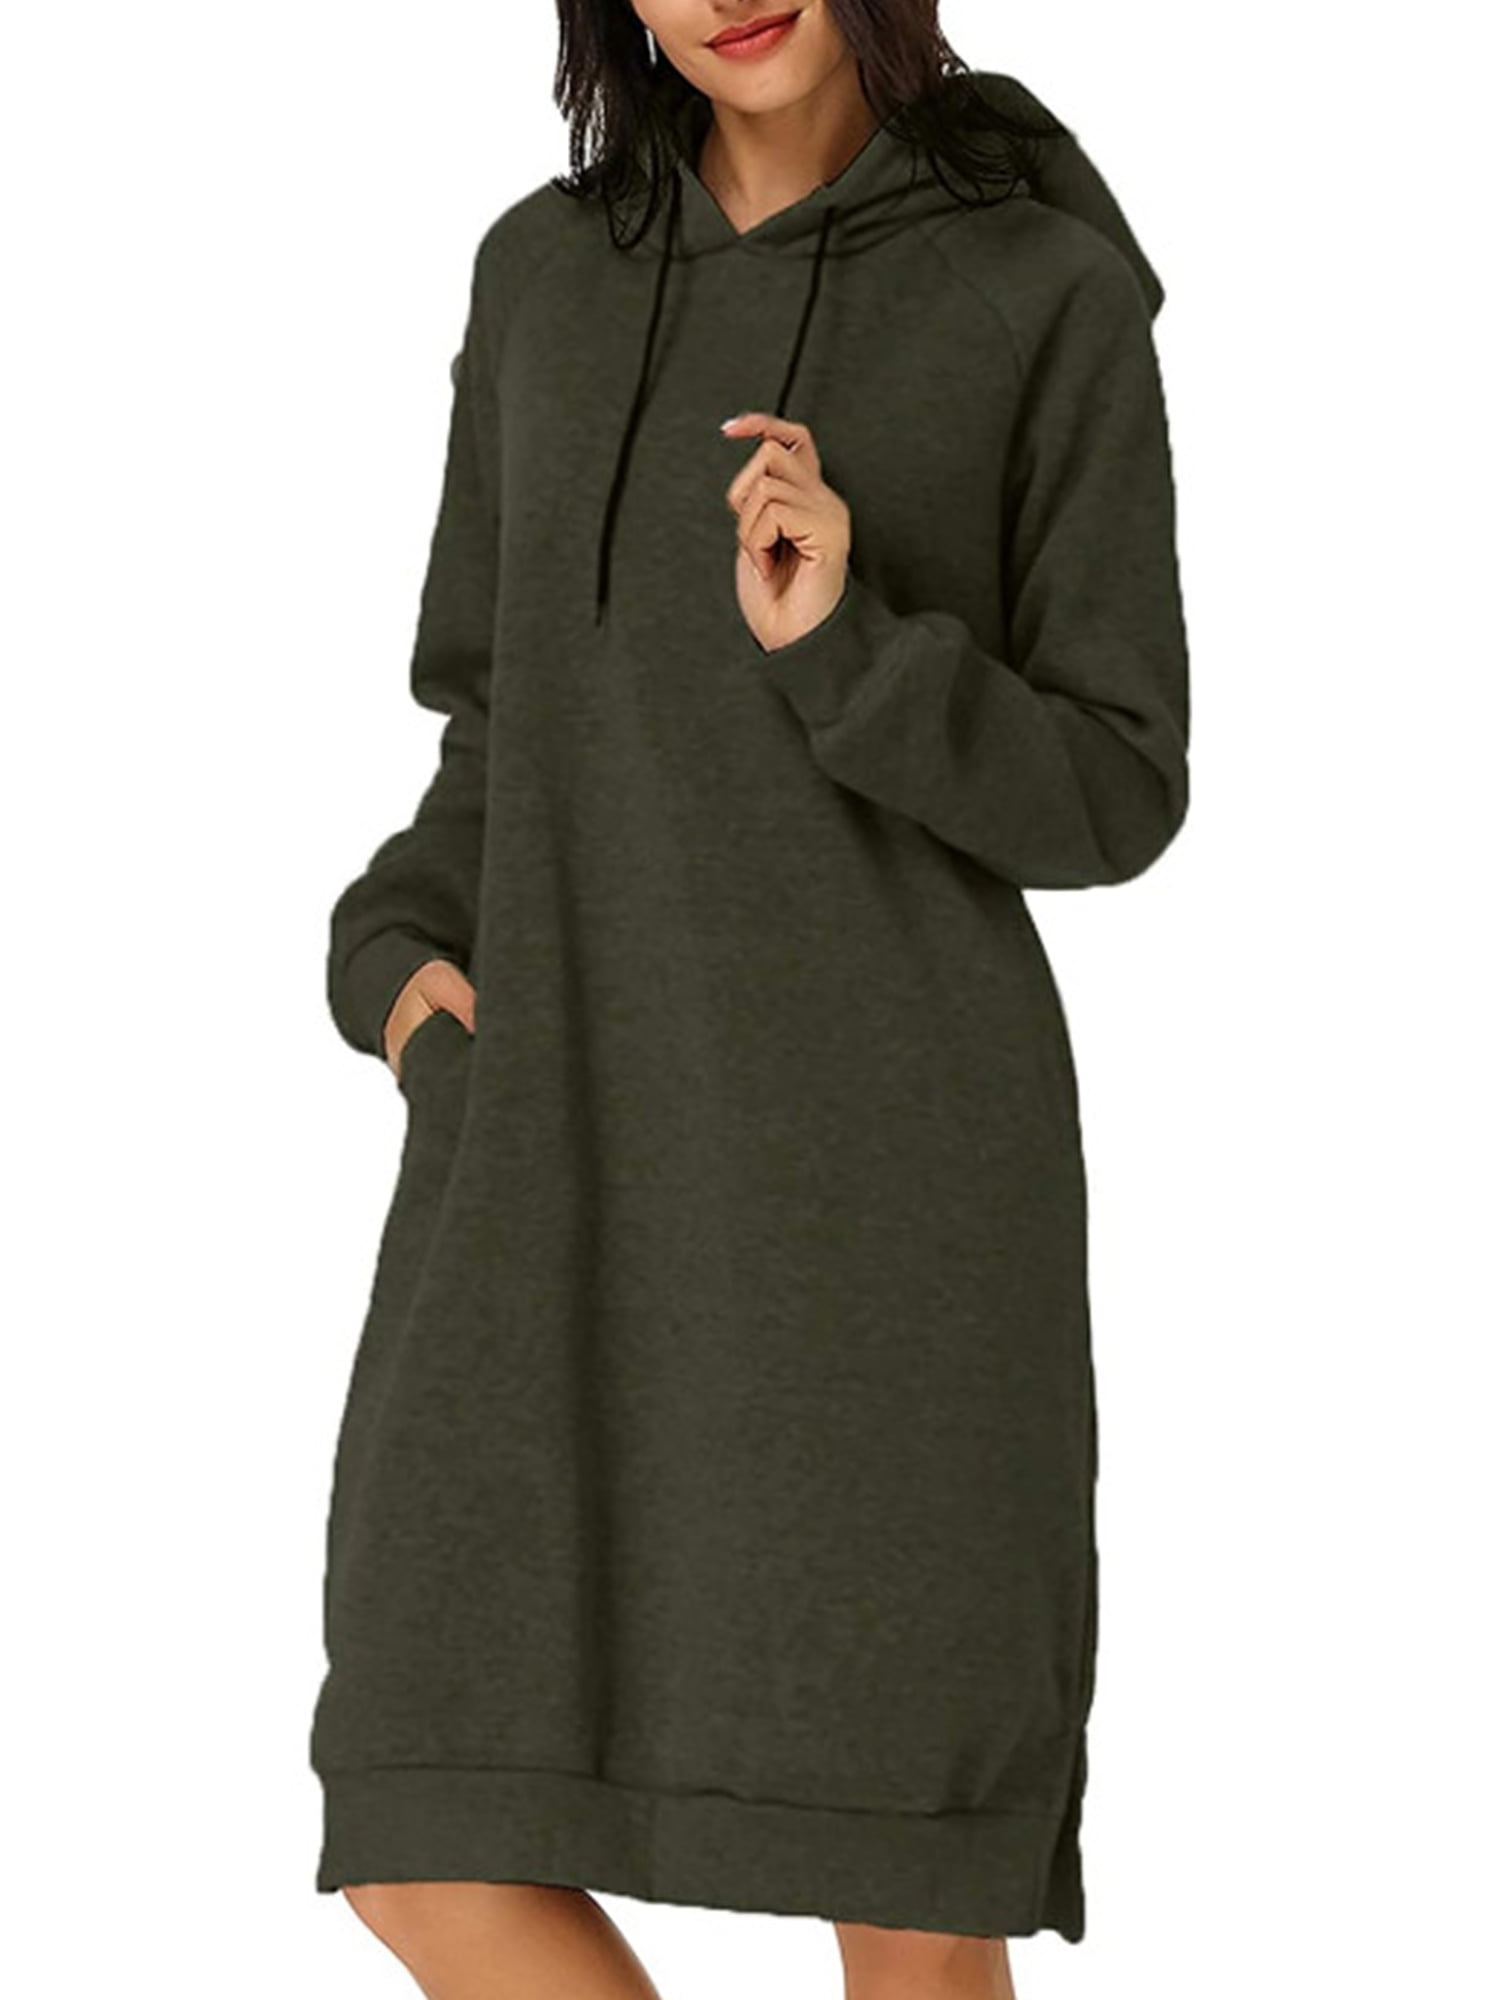 UKAP Long Sleeve Hooded Pockets Tunic Dress For Ladies Pullover Hoodie Dress  Tunic Sweatshirt Womens Long Sleeve Solid Color Tops Dress 